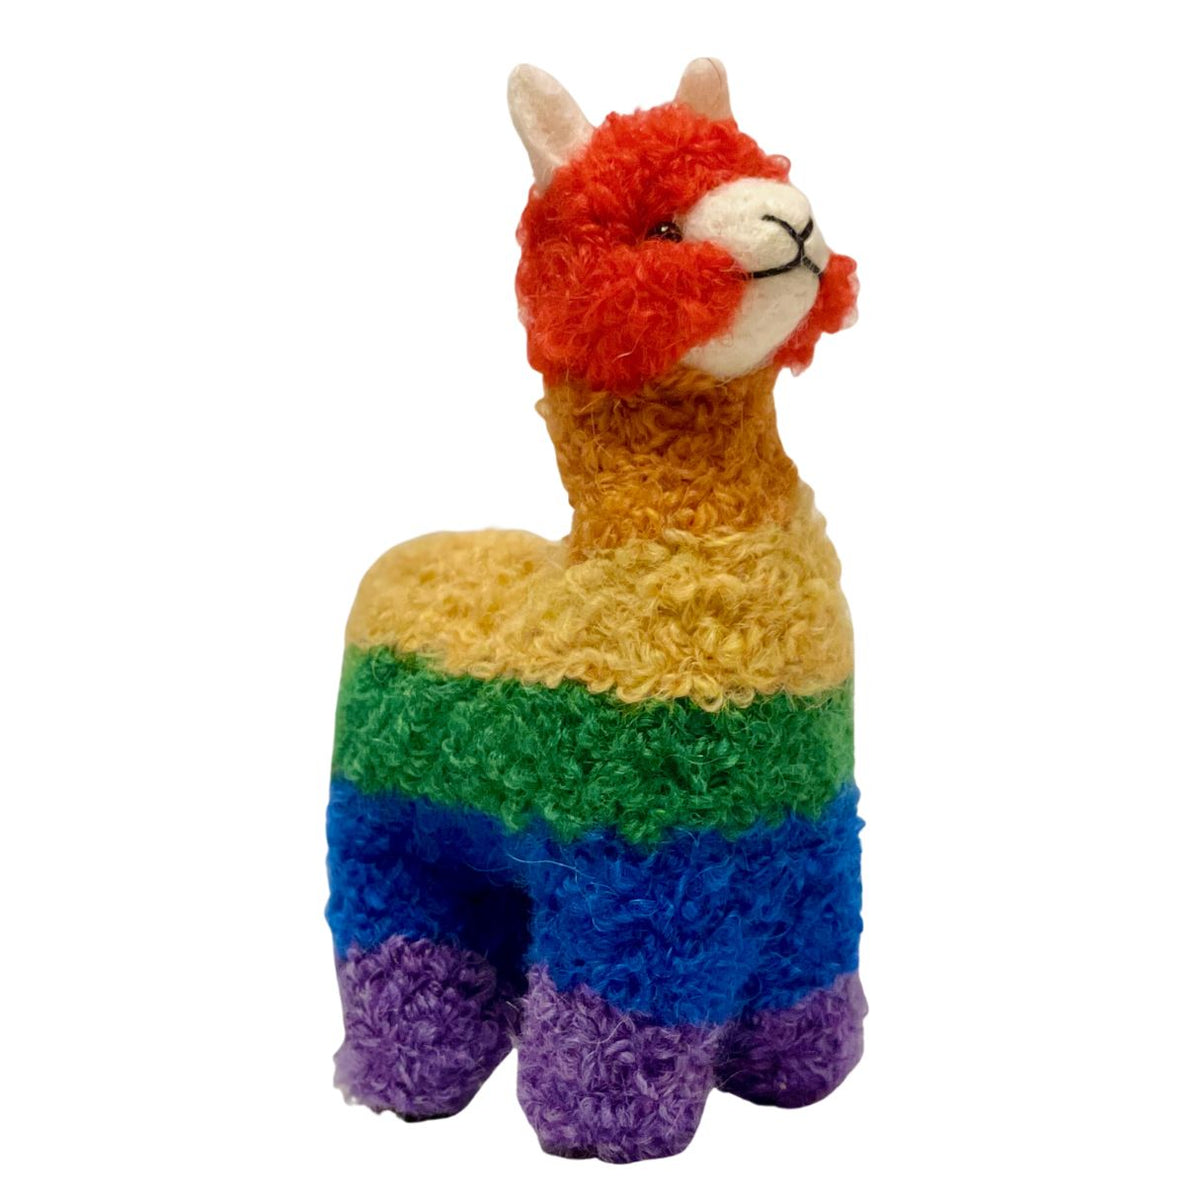 Colorful rainbow red orange yellow green blue purple stripes gay pride alpaca figurine and ornament made with real alpaca yarn